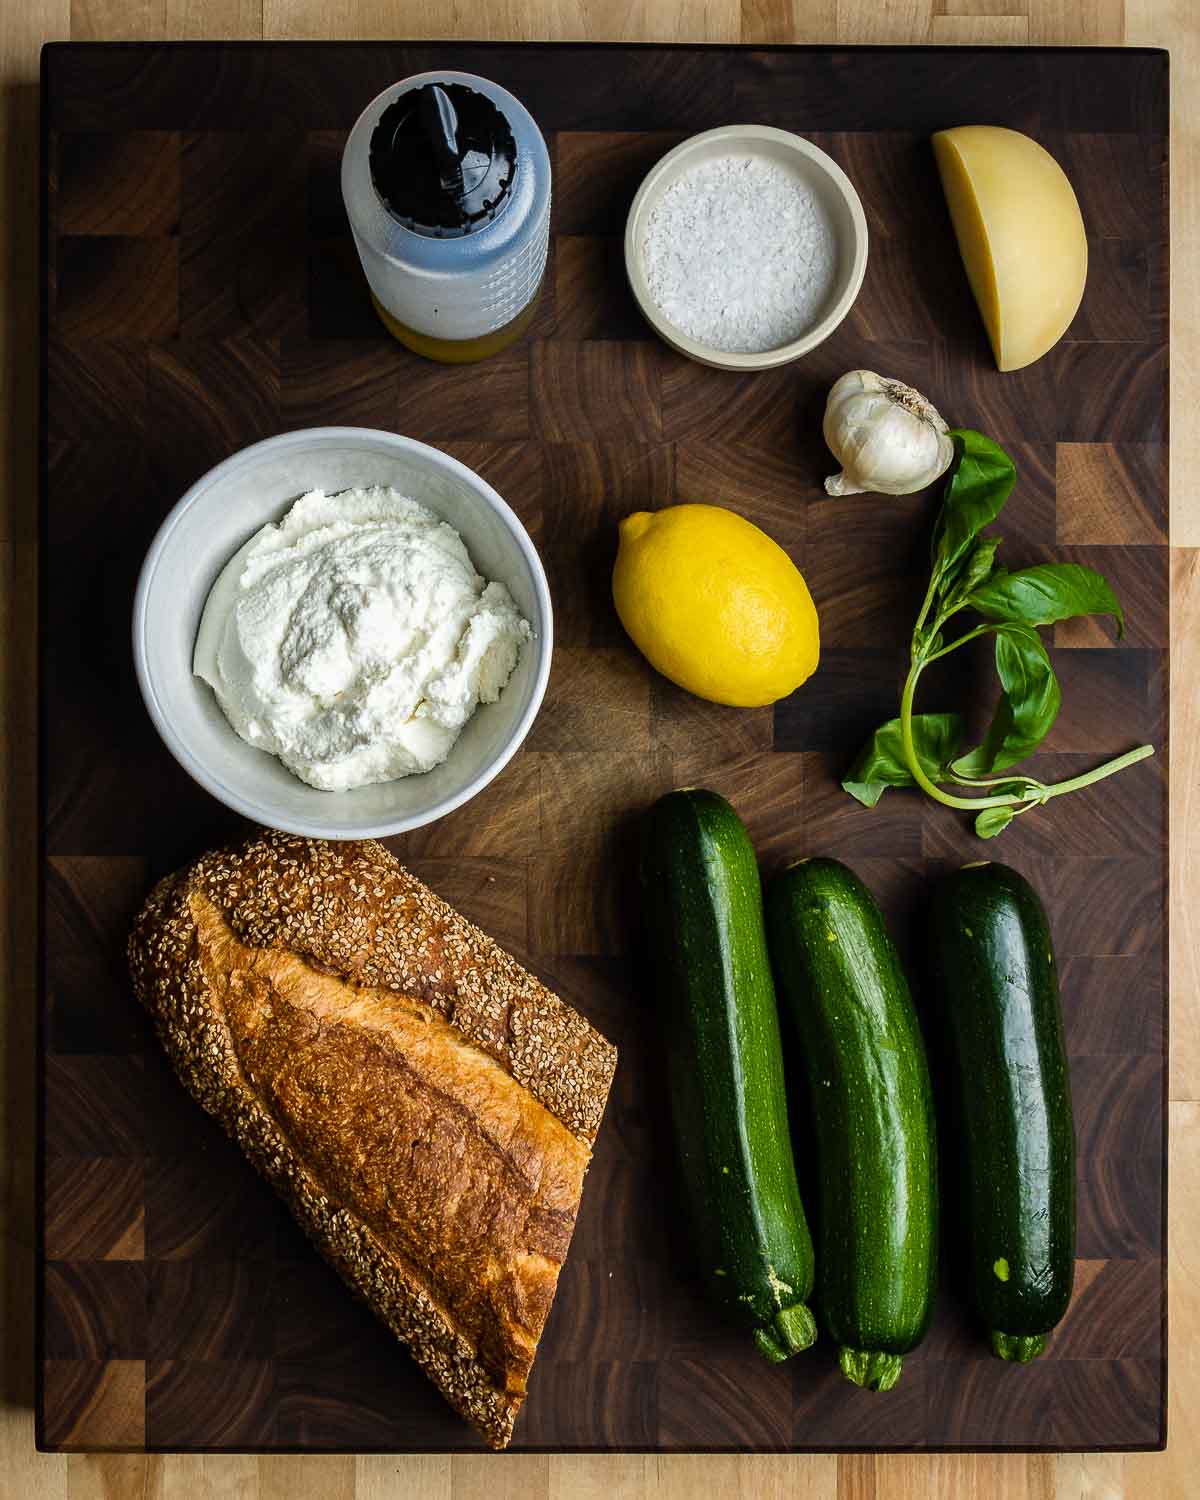 Ingredients shown: extra virgin olive oil, flaky salt, garlic, caciocavallo cheese, ricotta, lemon, basil, bread, and zucchini.